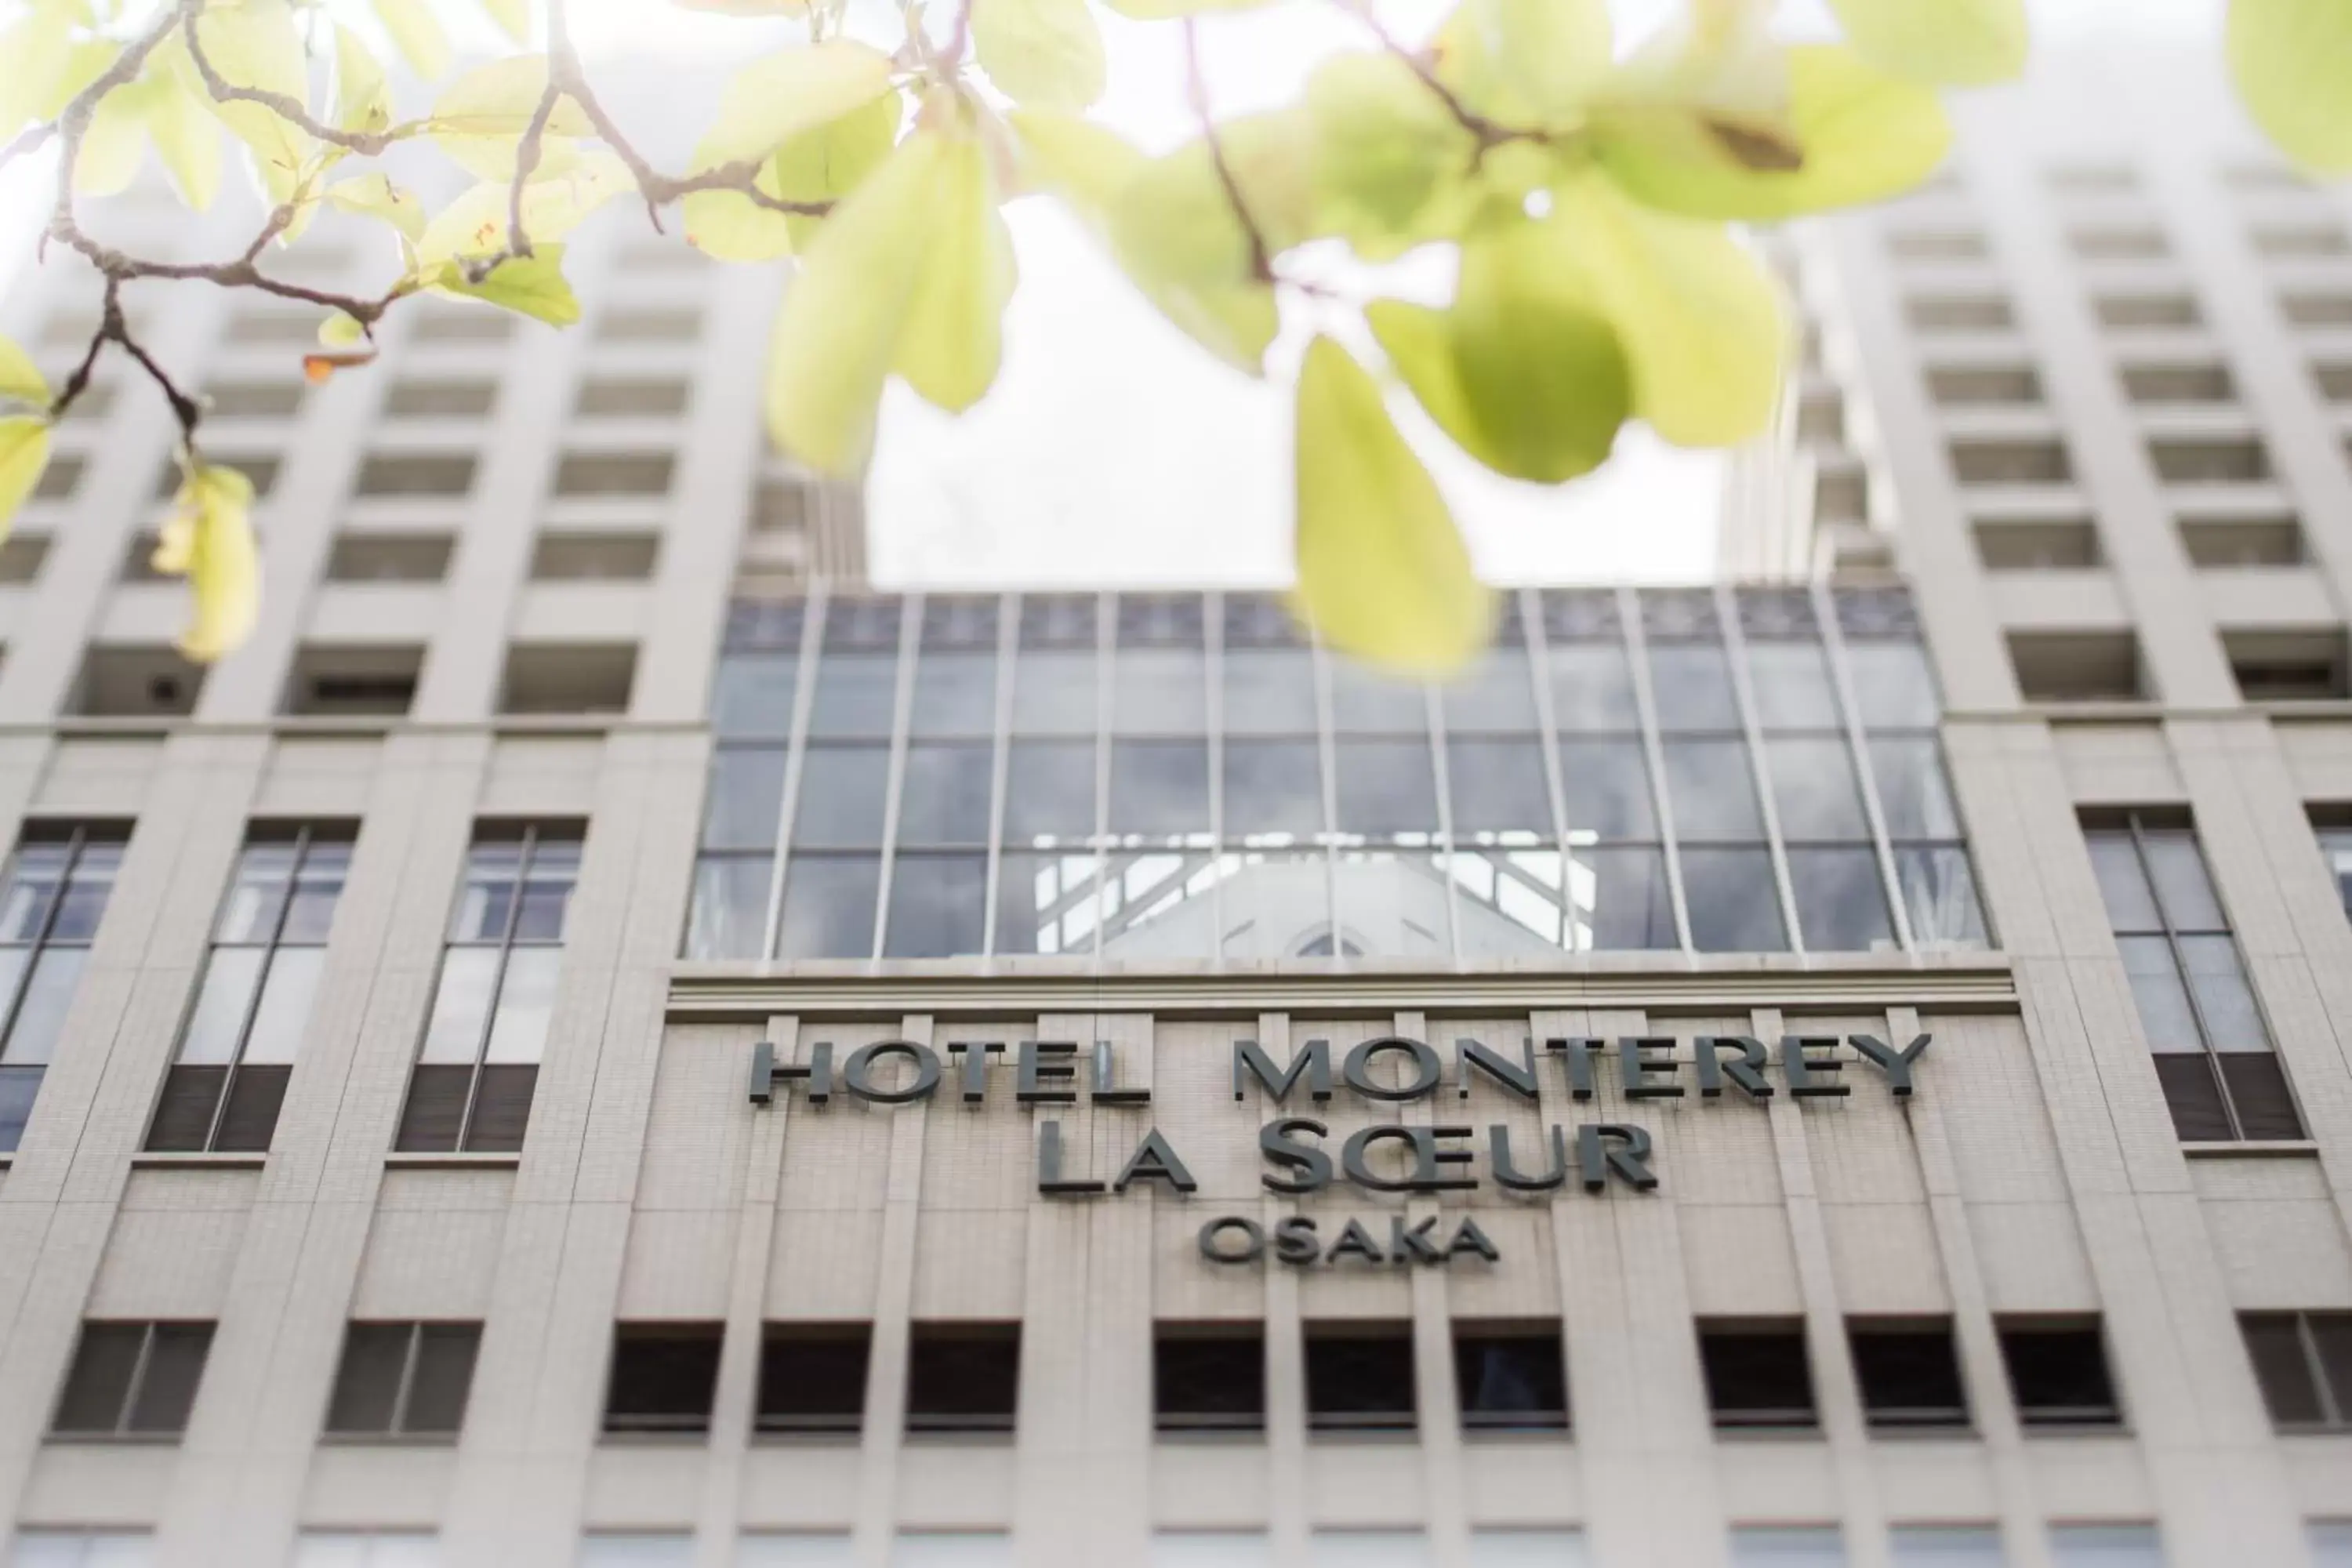 Property Logo/Sign in Hotel Monterey La Soeur Osaka